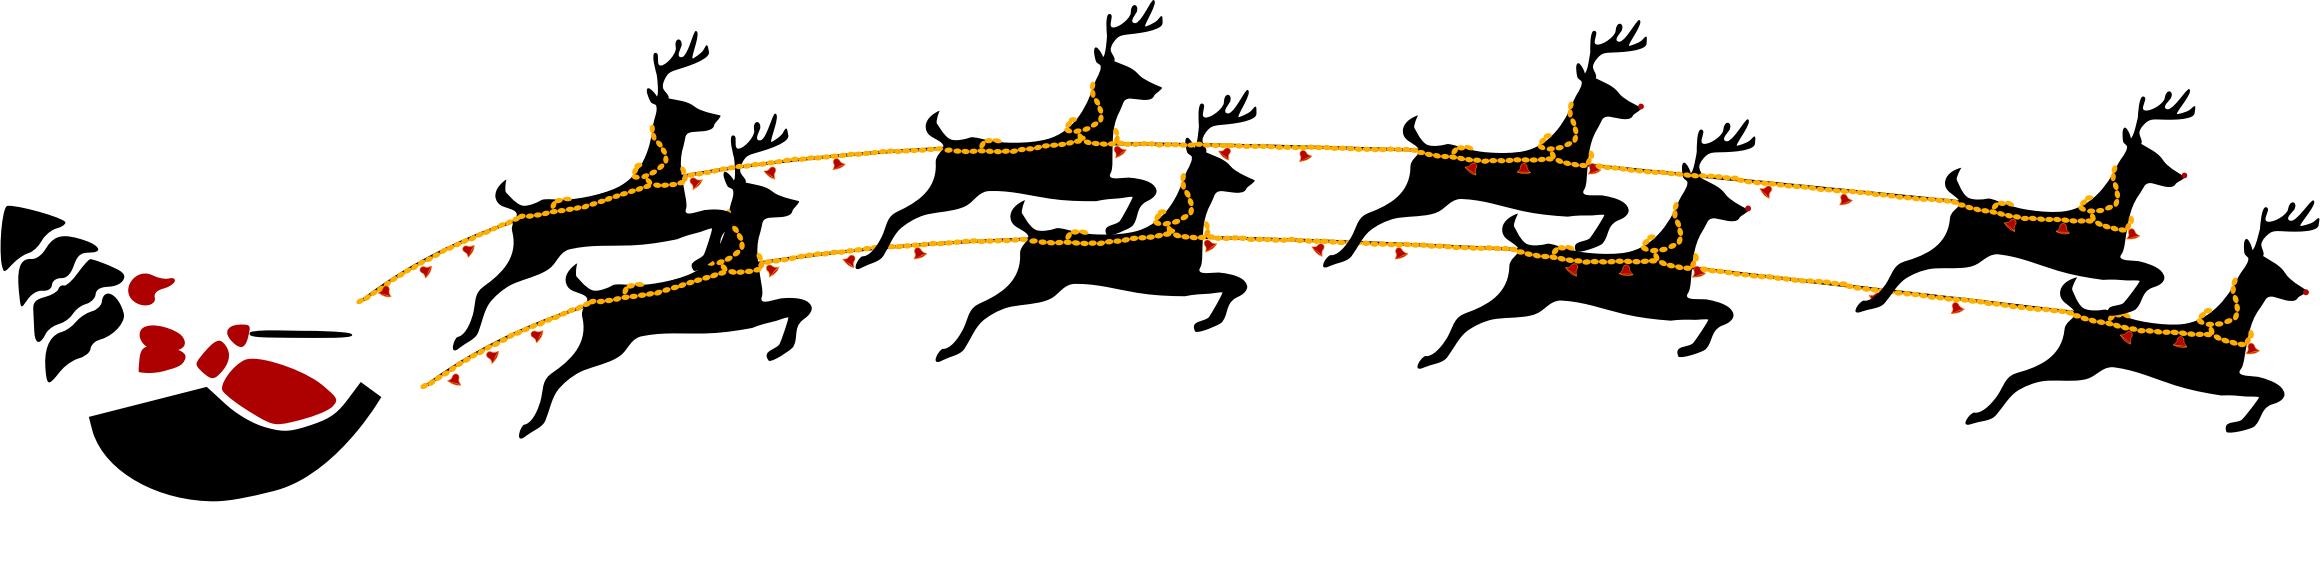 Santa with eight reindeer png